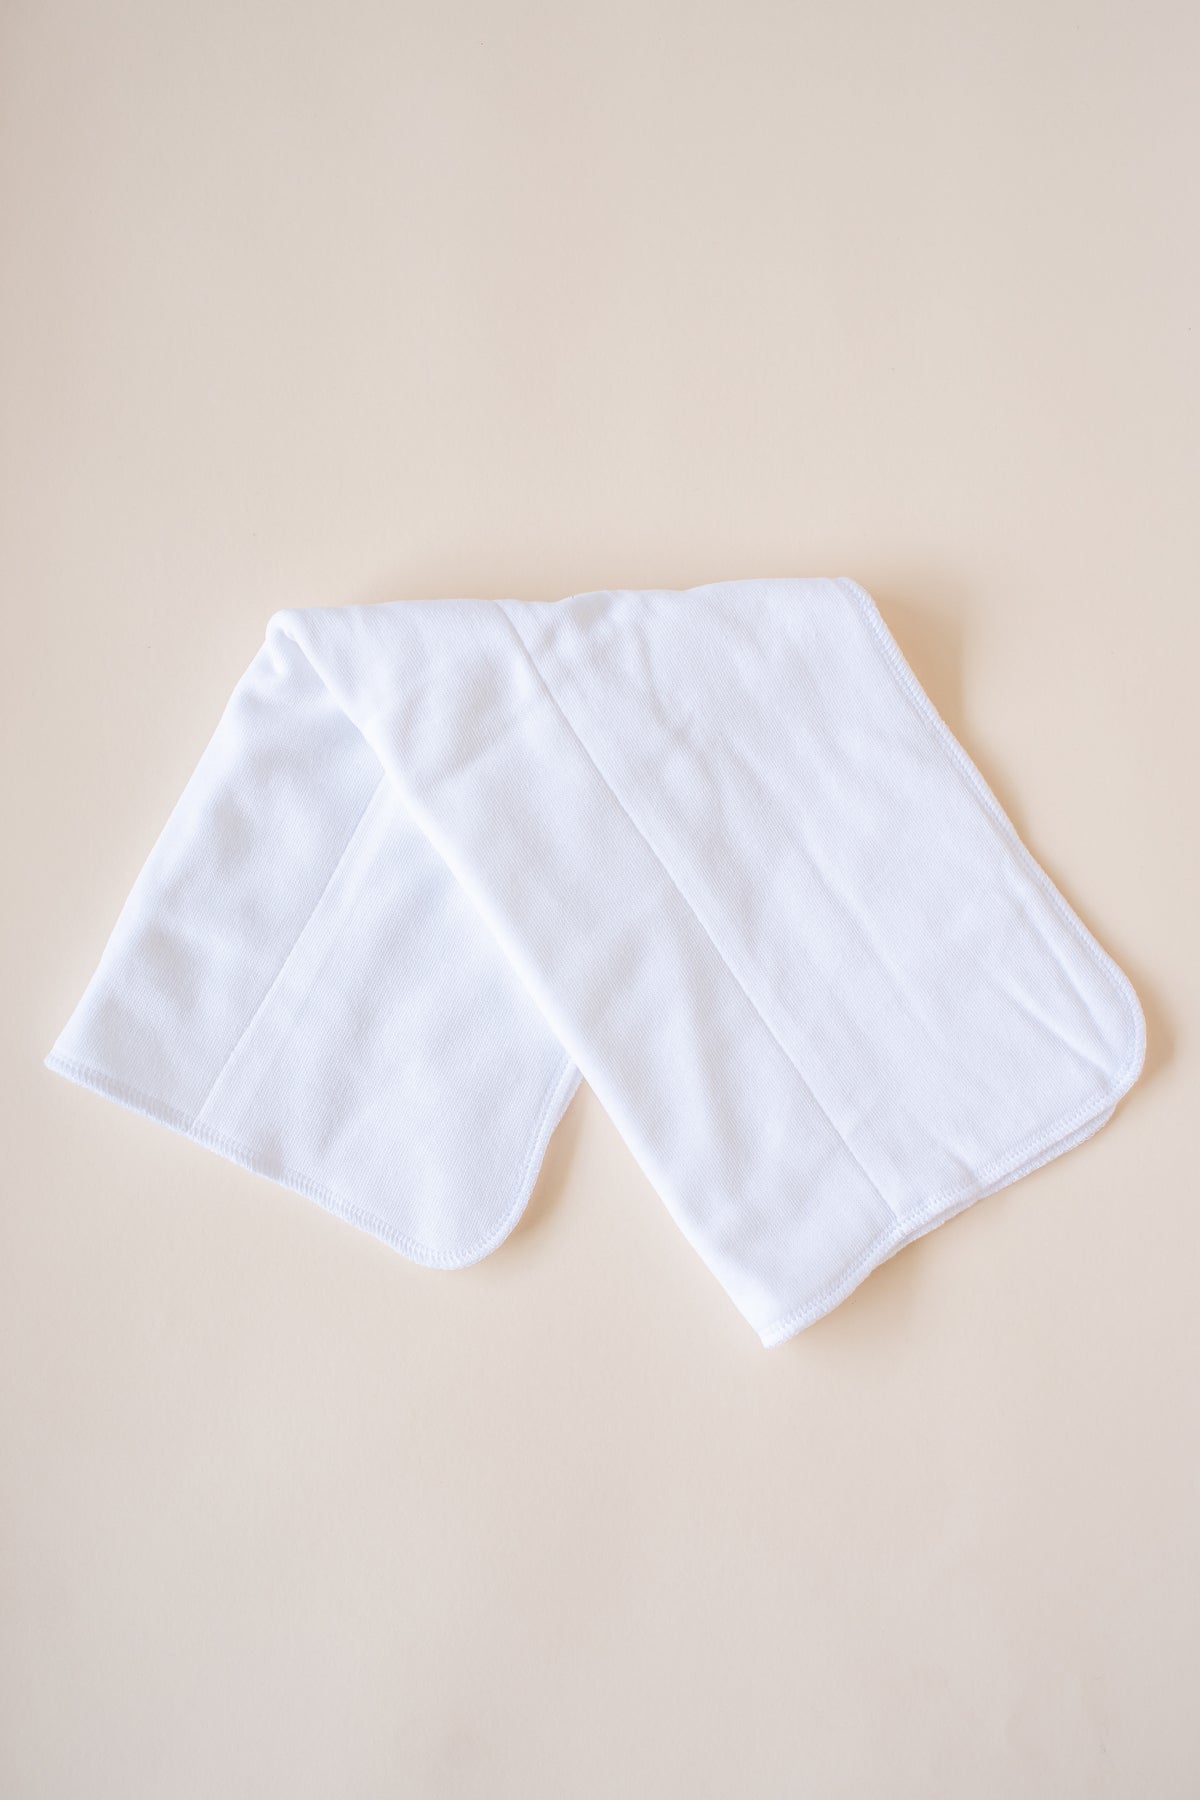 Tri-Fold Burp Cloth